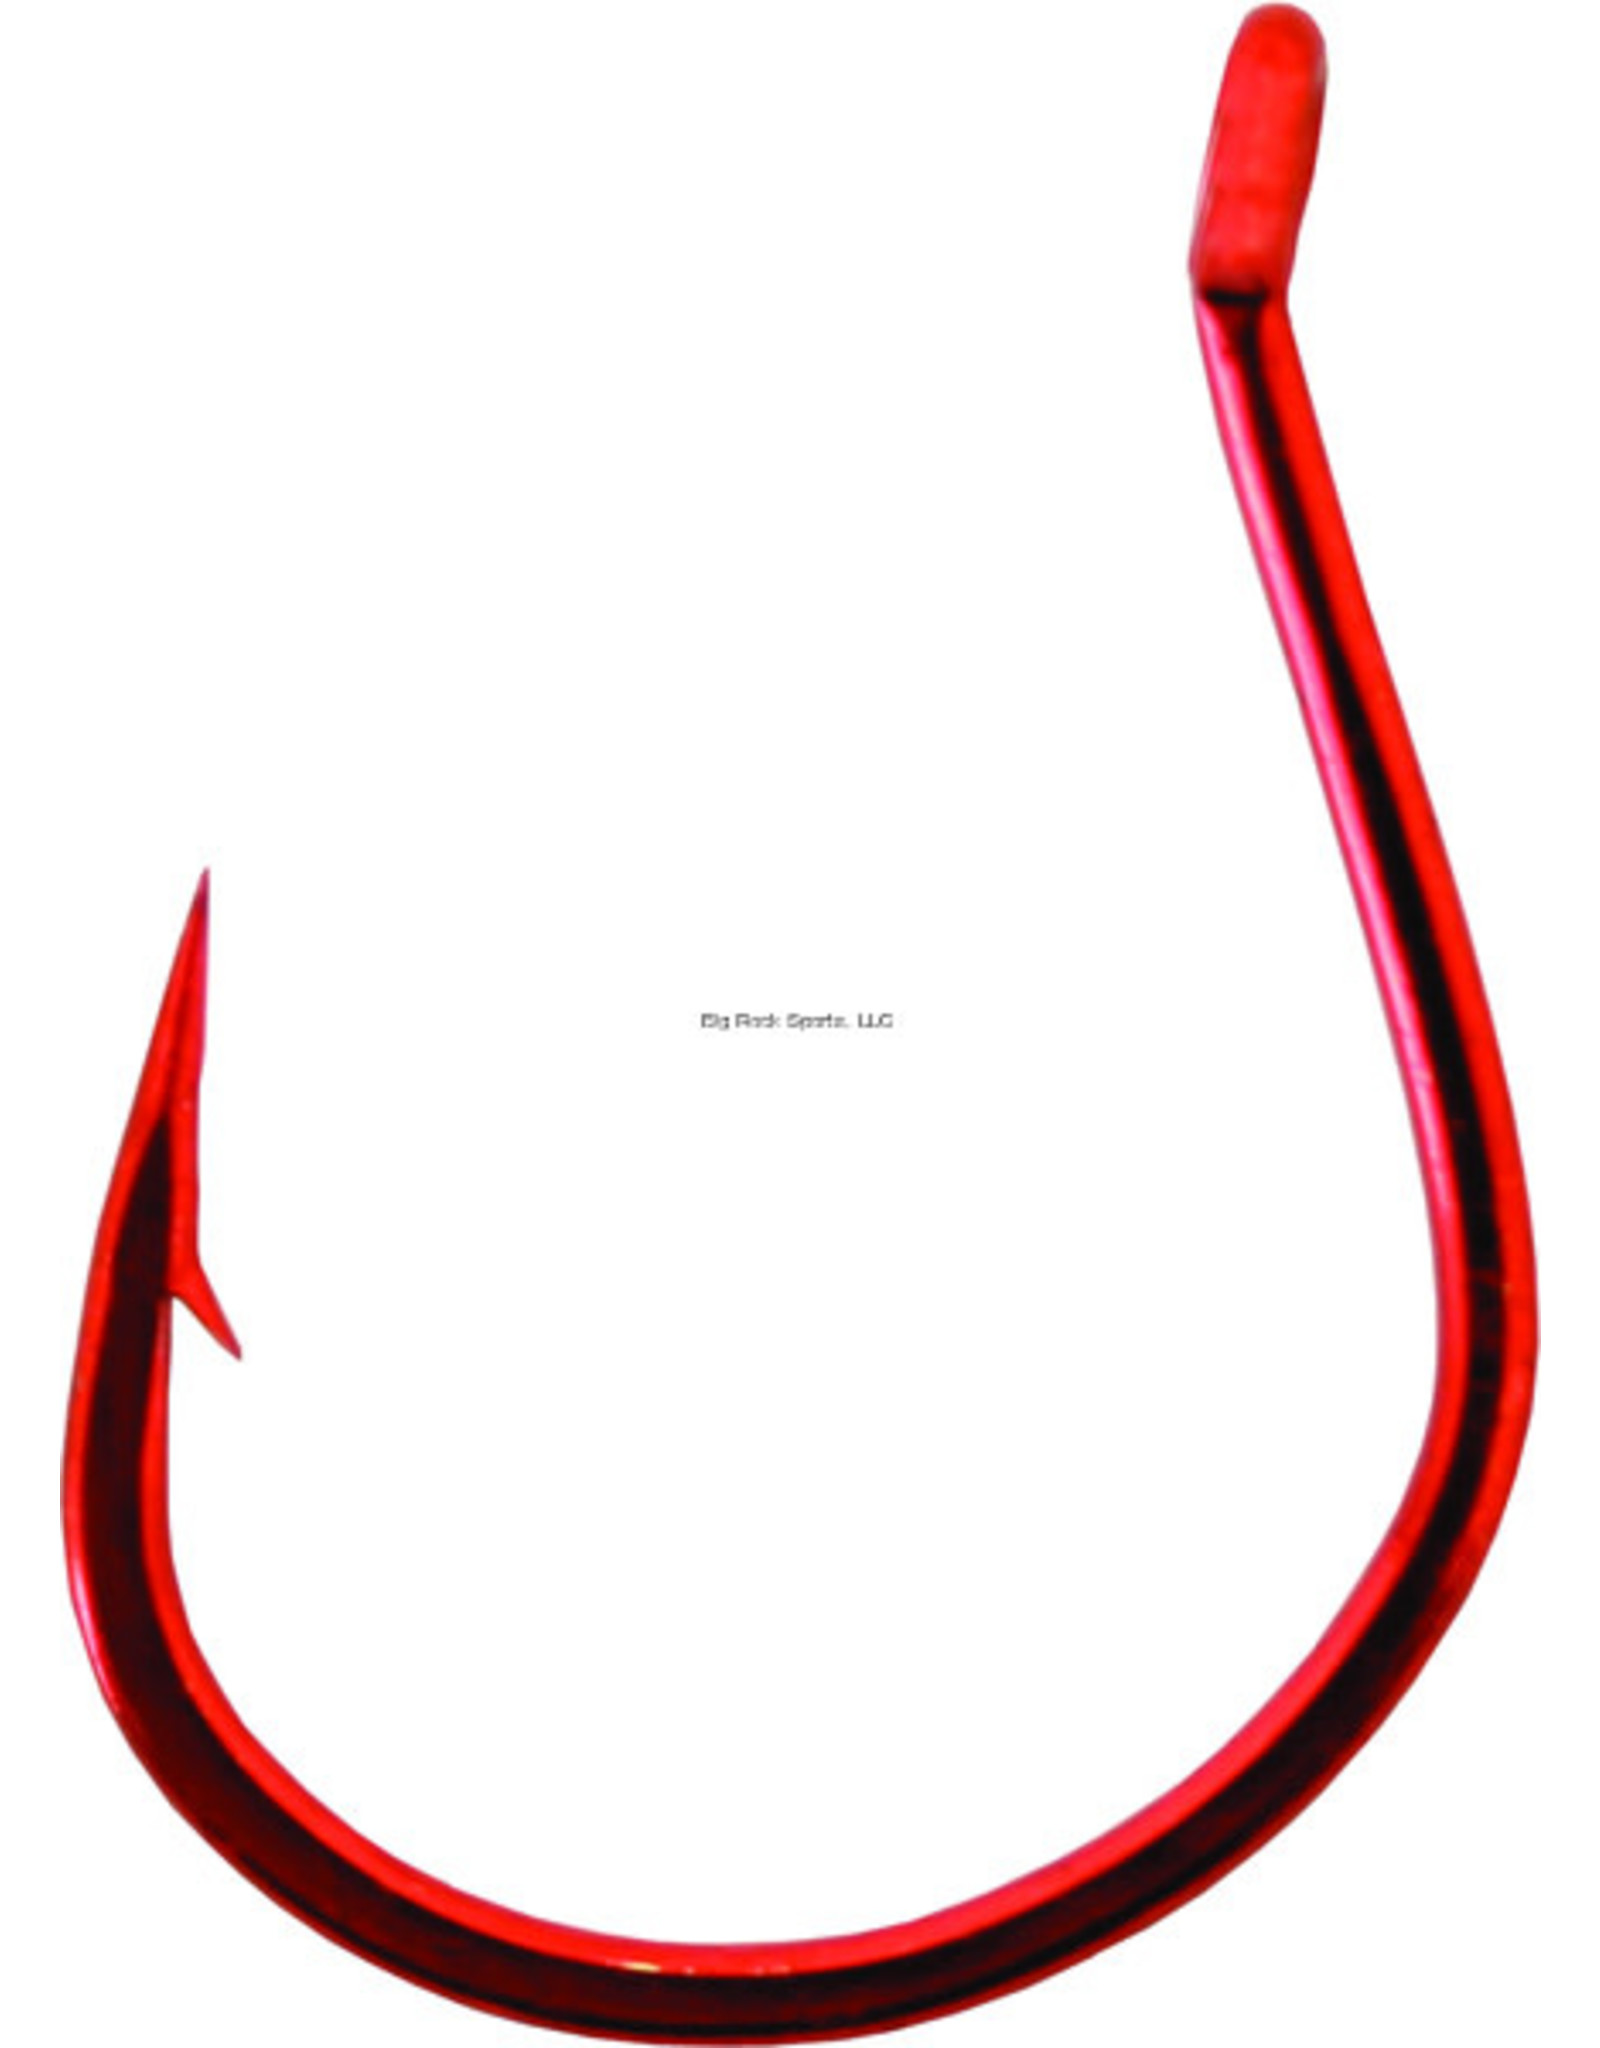 Gamakatsu Gamakatsu 230310 Finesse Wide Gap Hook, Size 1, Needle Point, Ringed Eye, Red, 6 per Pack (846923)